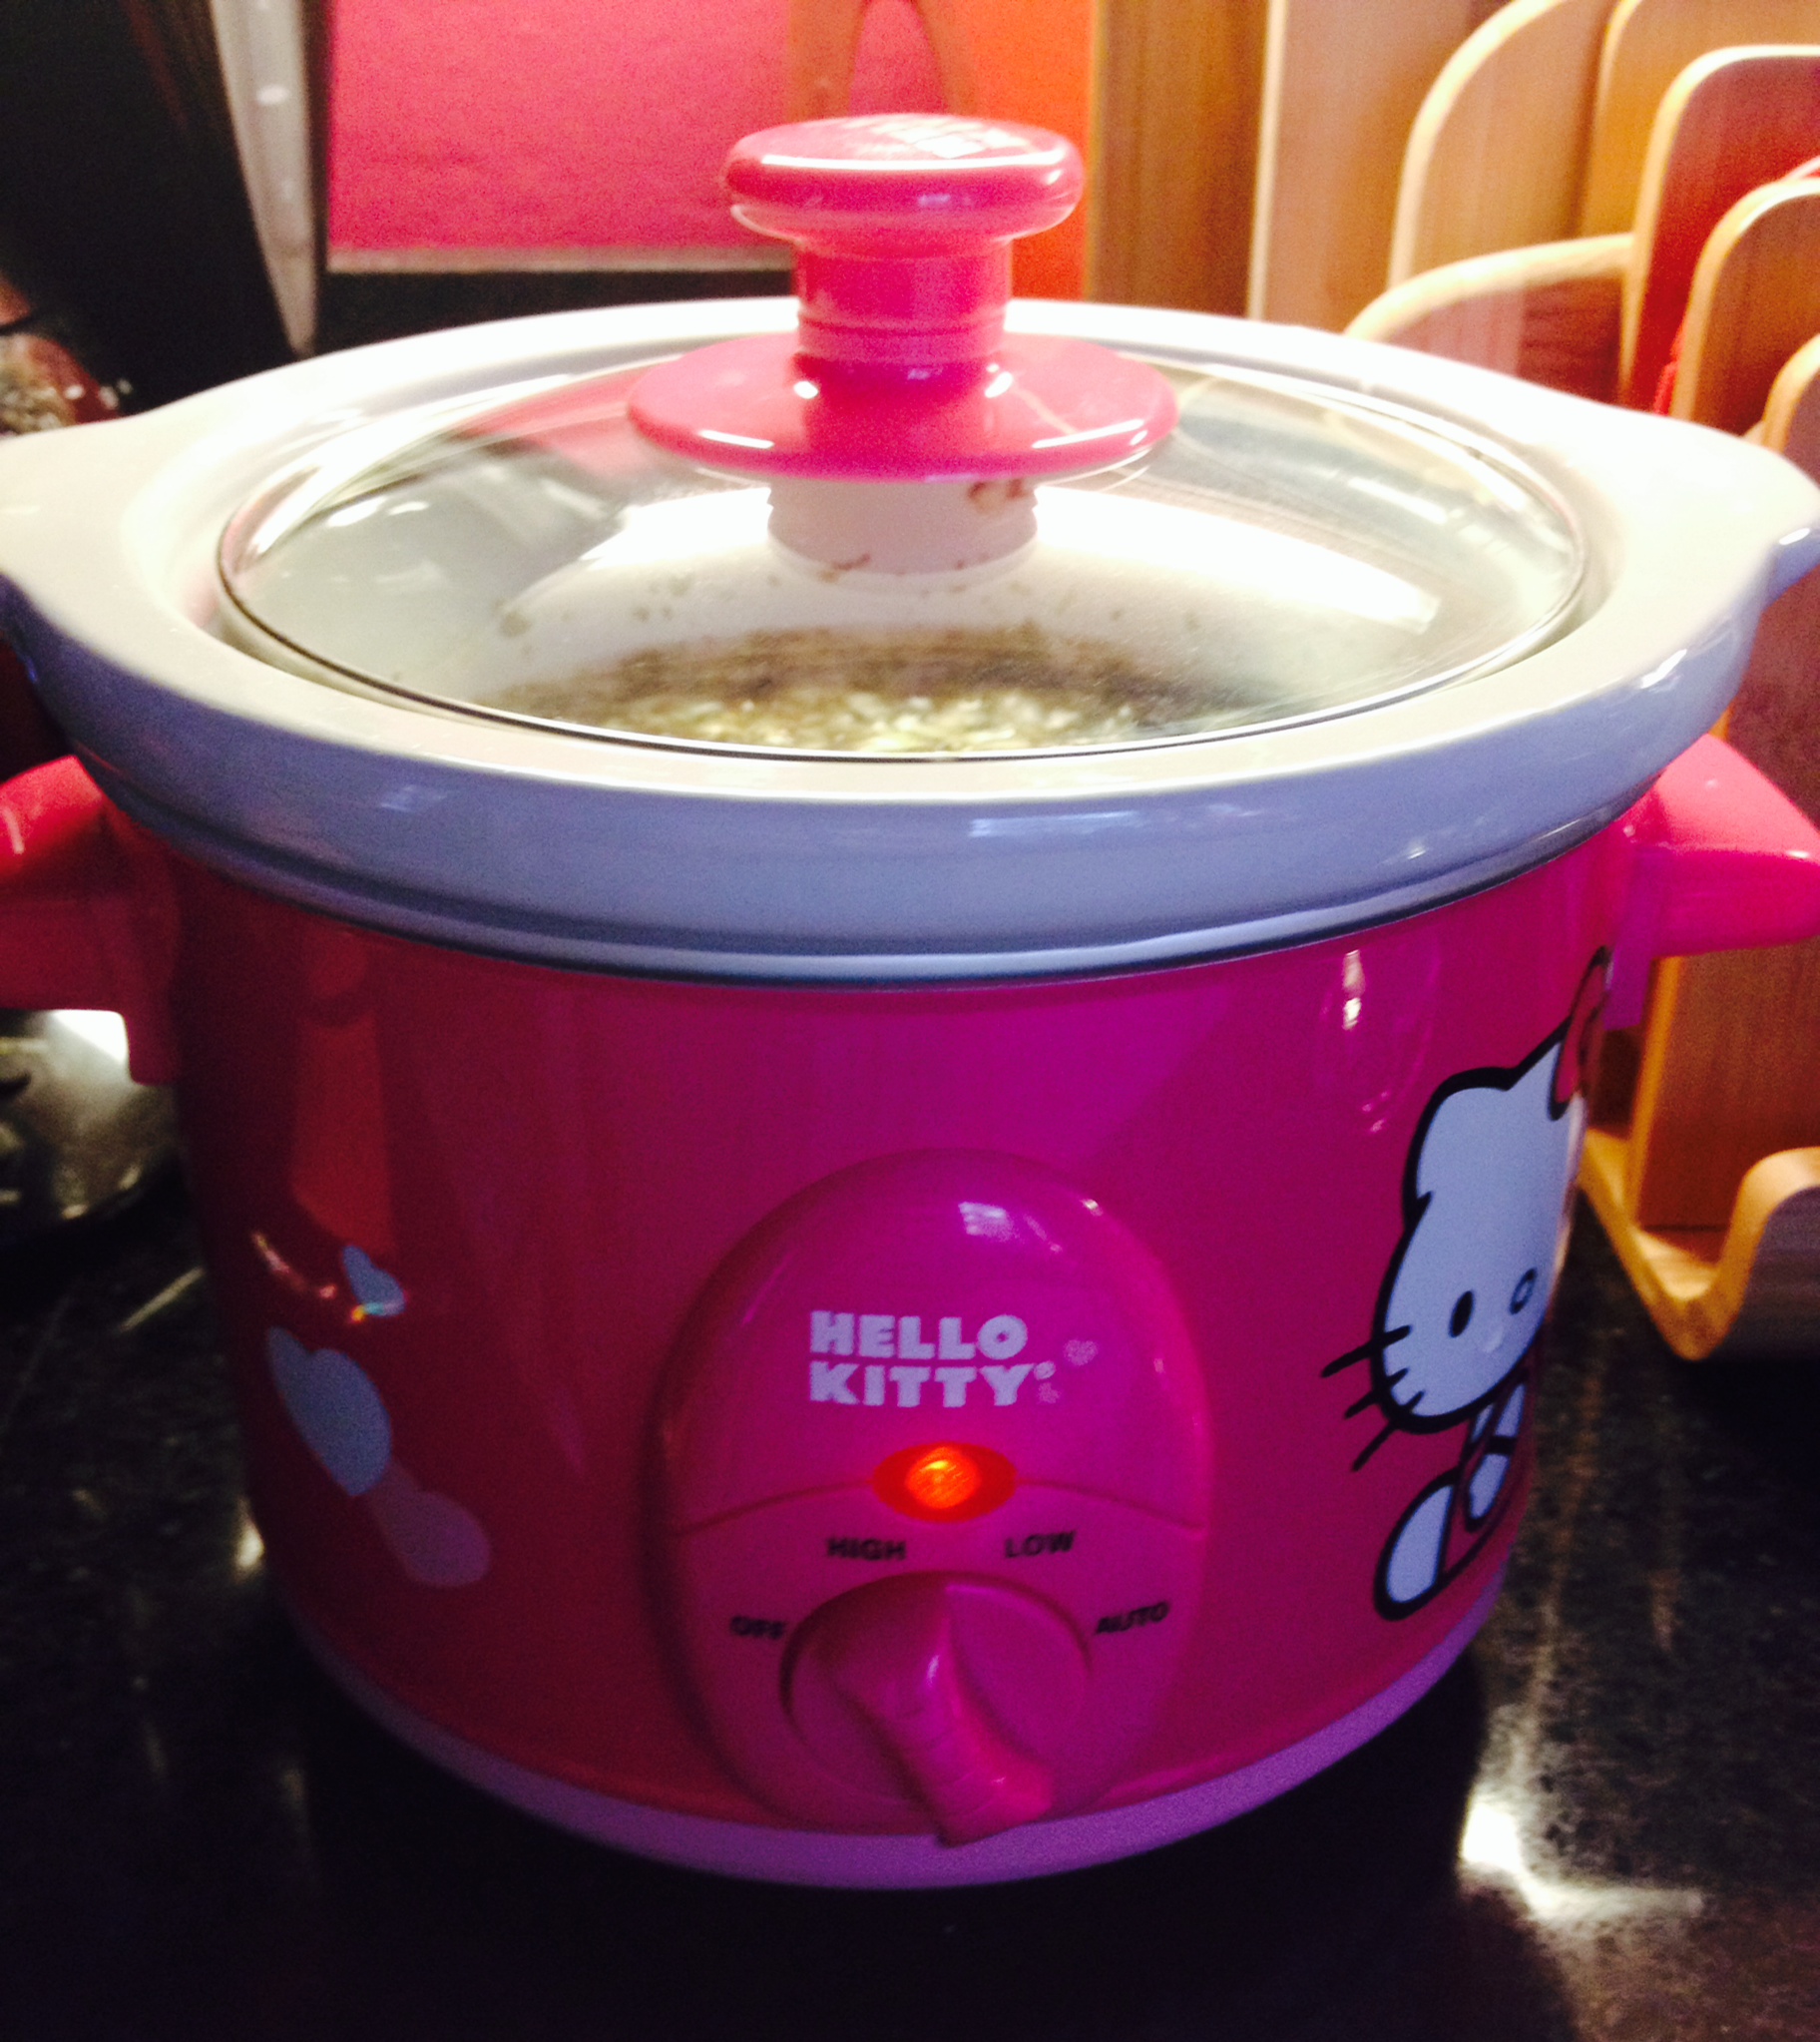 Hello Kitty APP-41209 Slow Cooker